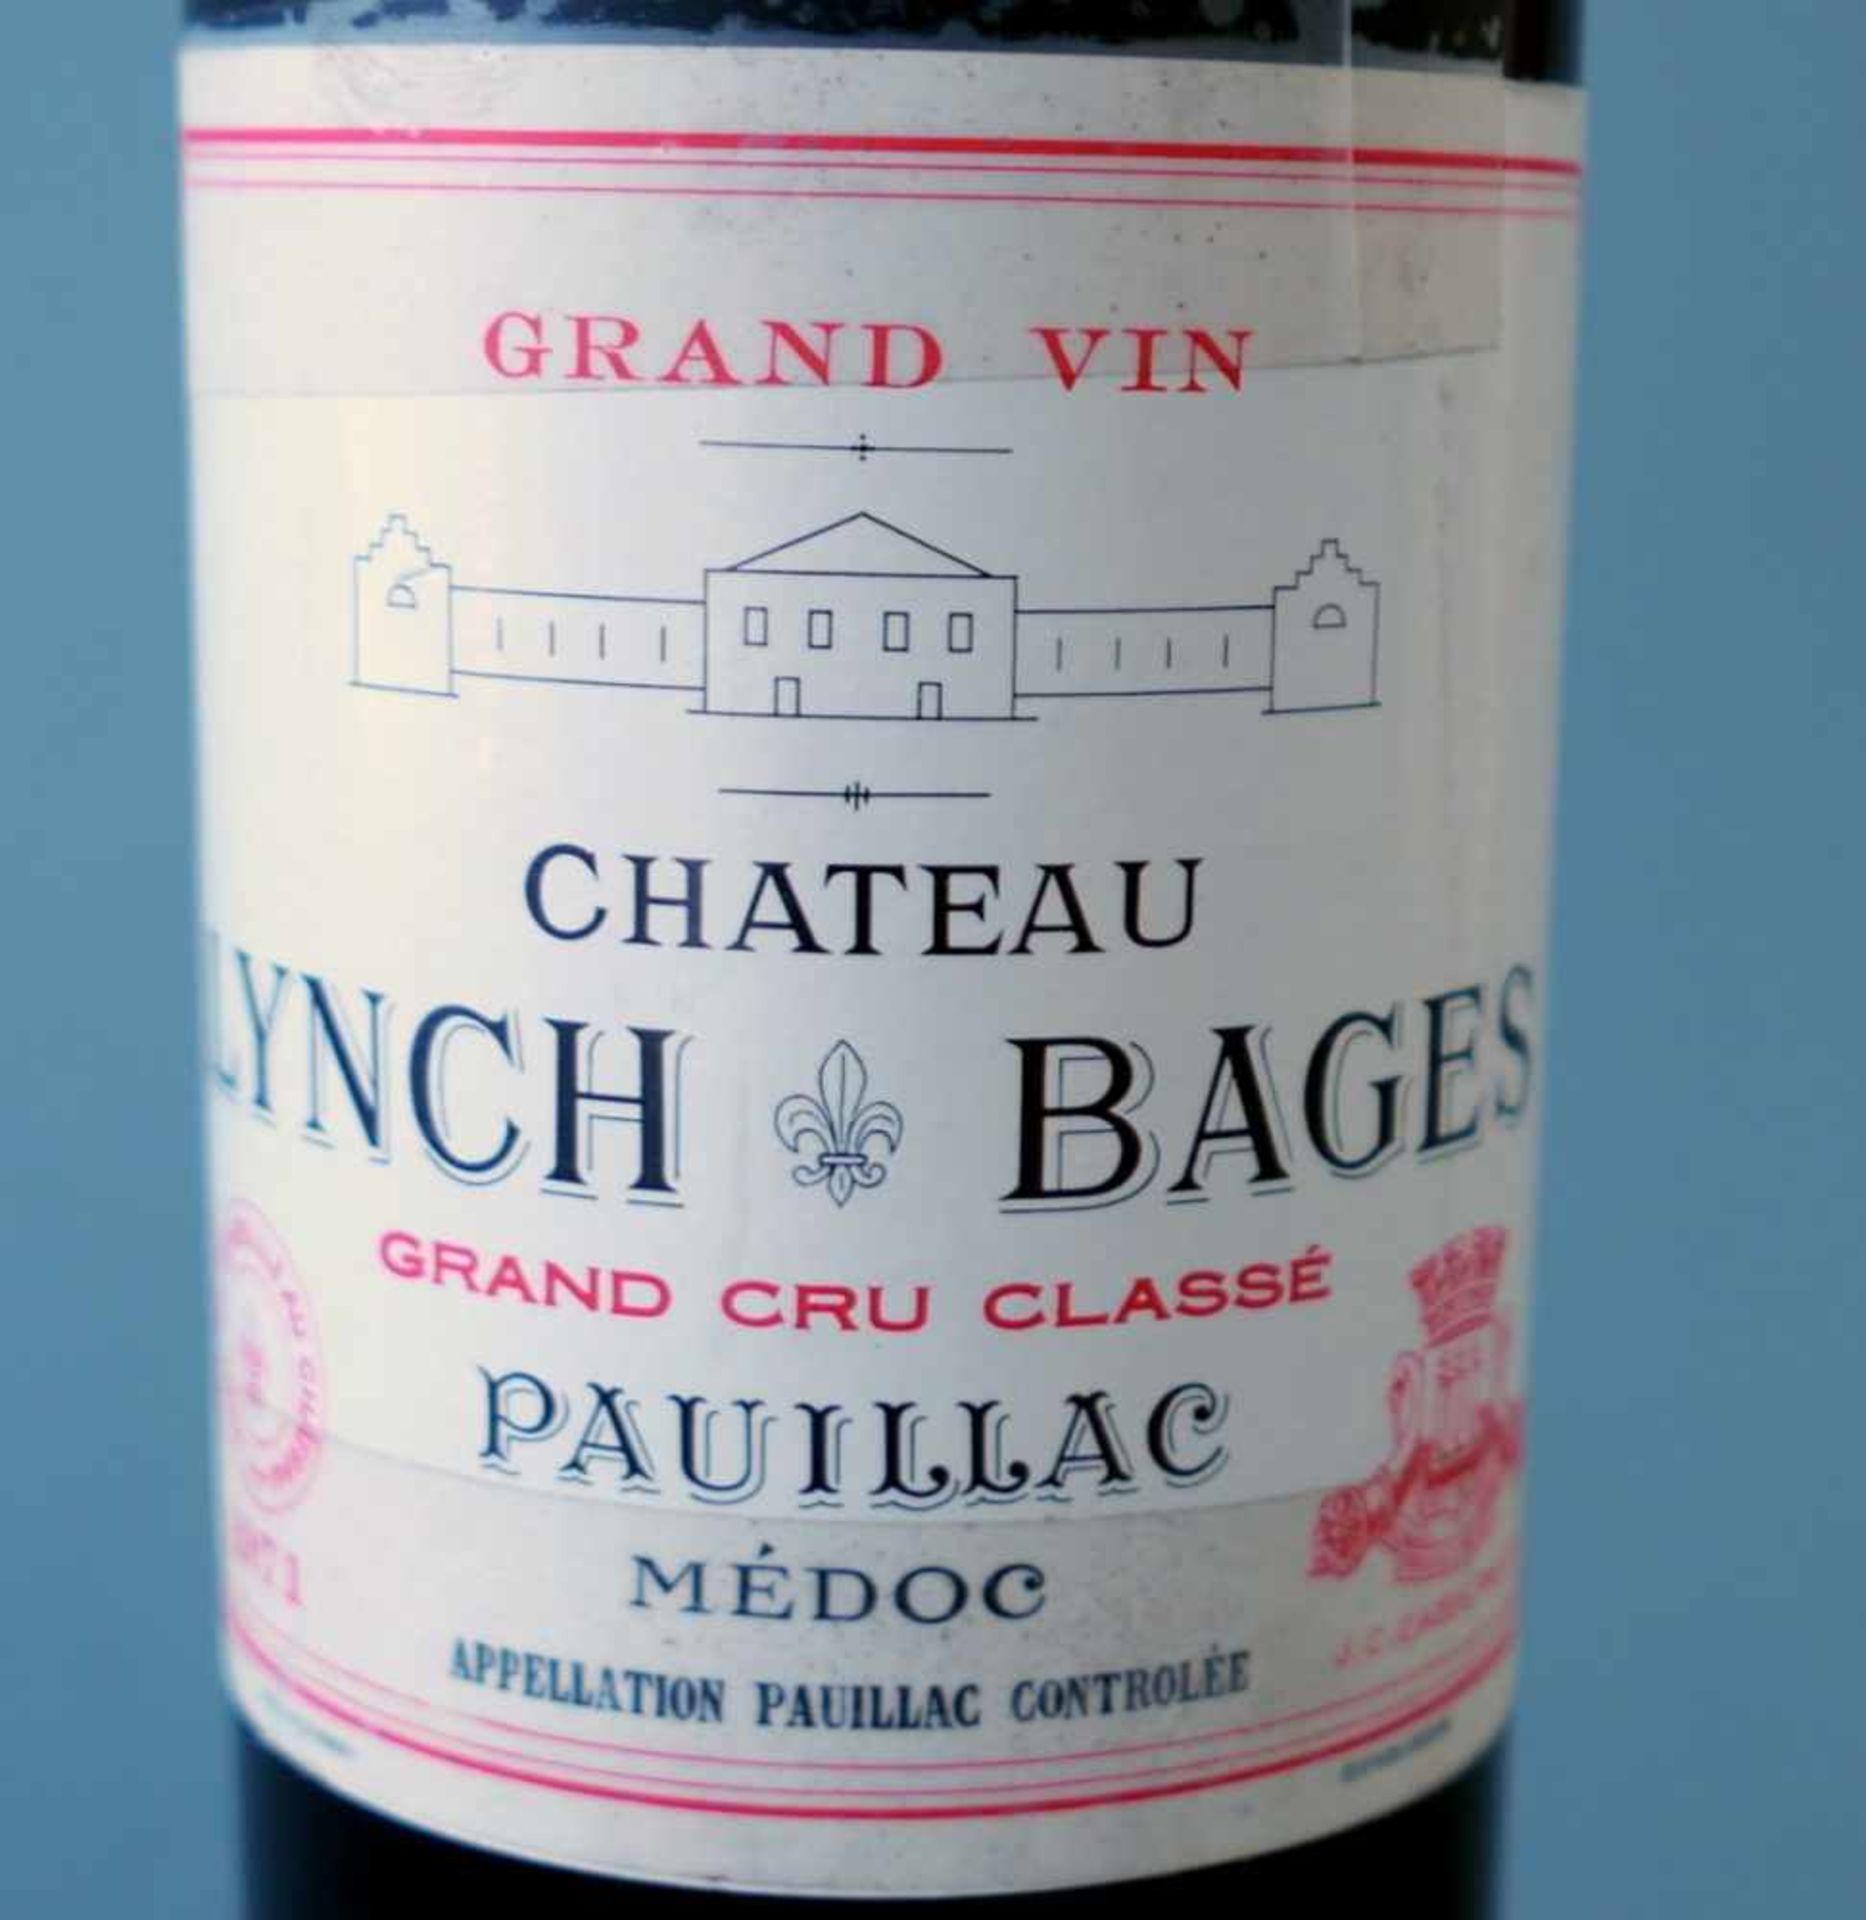 Chateau Lynch BagesGrand Cru Classé, Jahrgang 1971, Inhalt 750 ml. Pauillac, Bordeaux, - Image 2 of 2